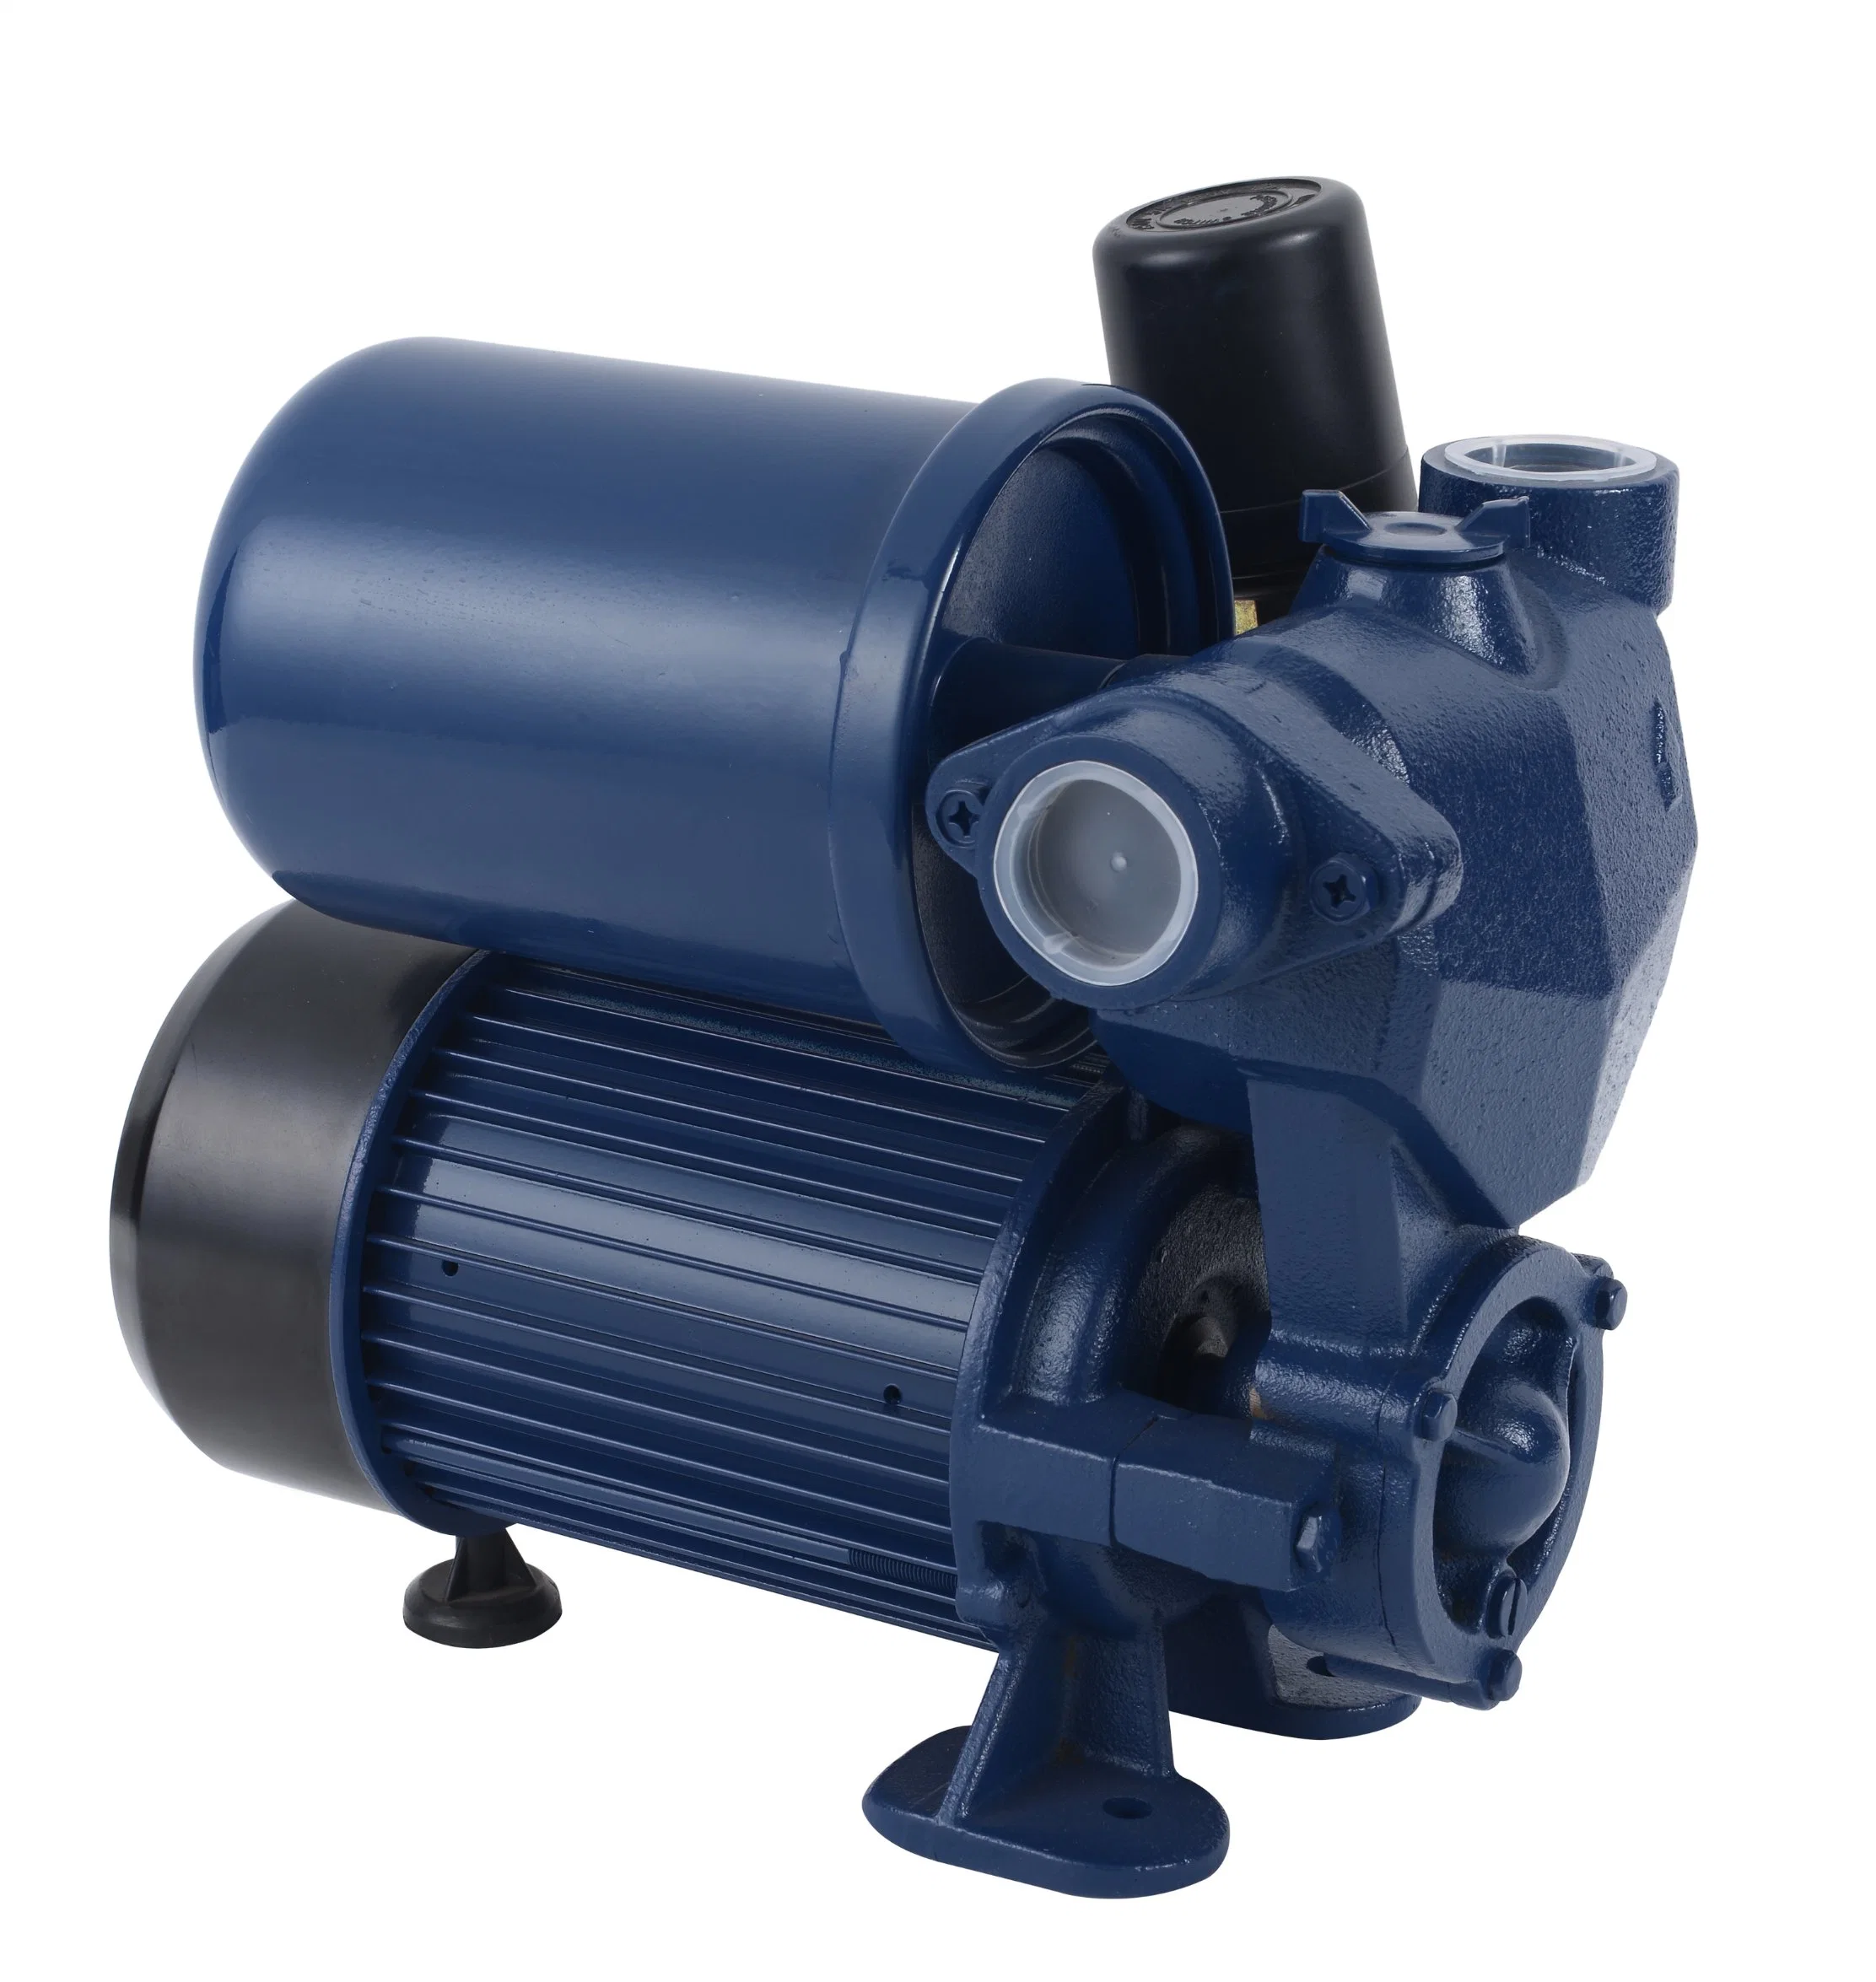 Bivolt Bomba Pressurizadora Asp37 Cast Iron Automatic Home Electric Booster Water Pump